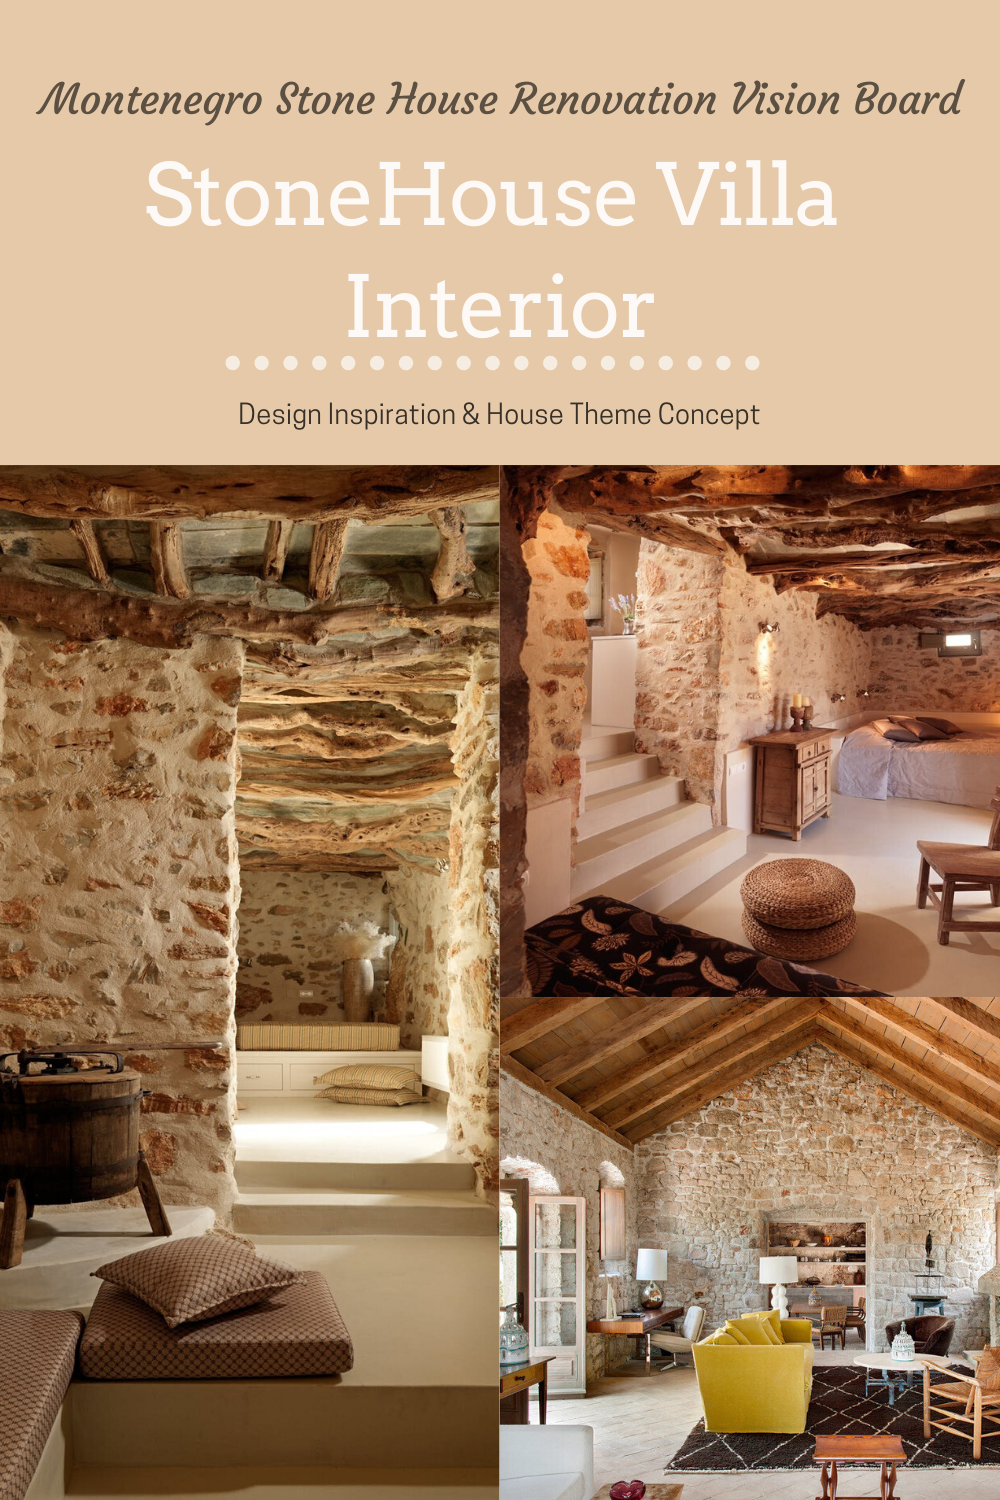 StoneHouse Villa Interior Design Inspiration.png